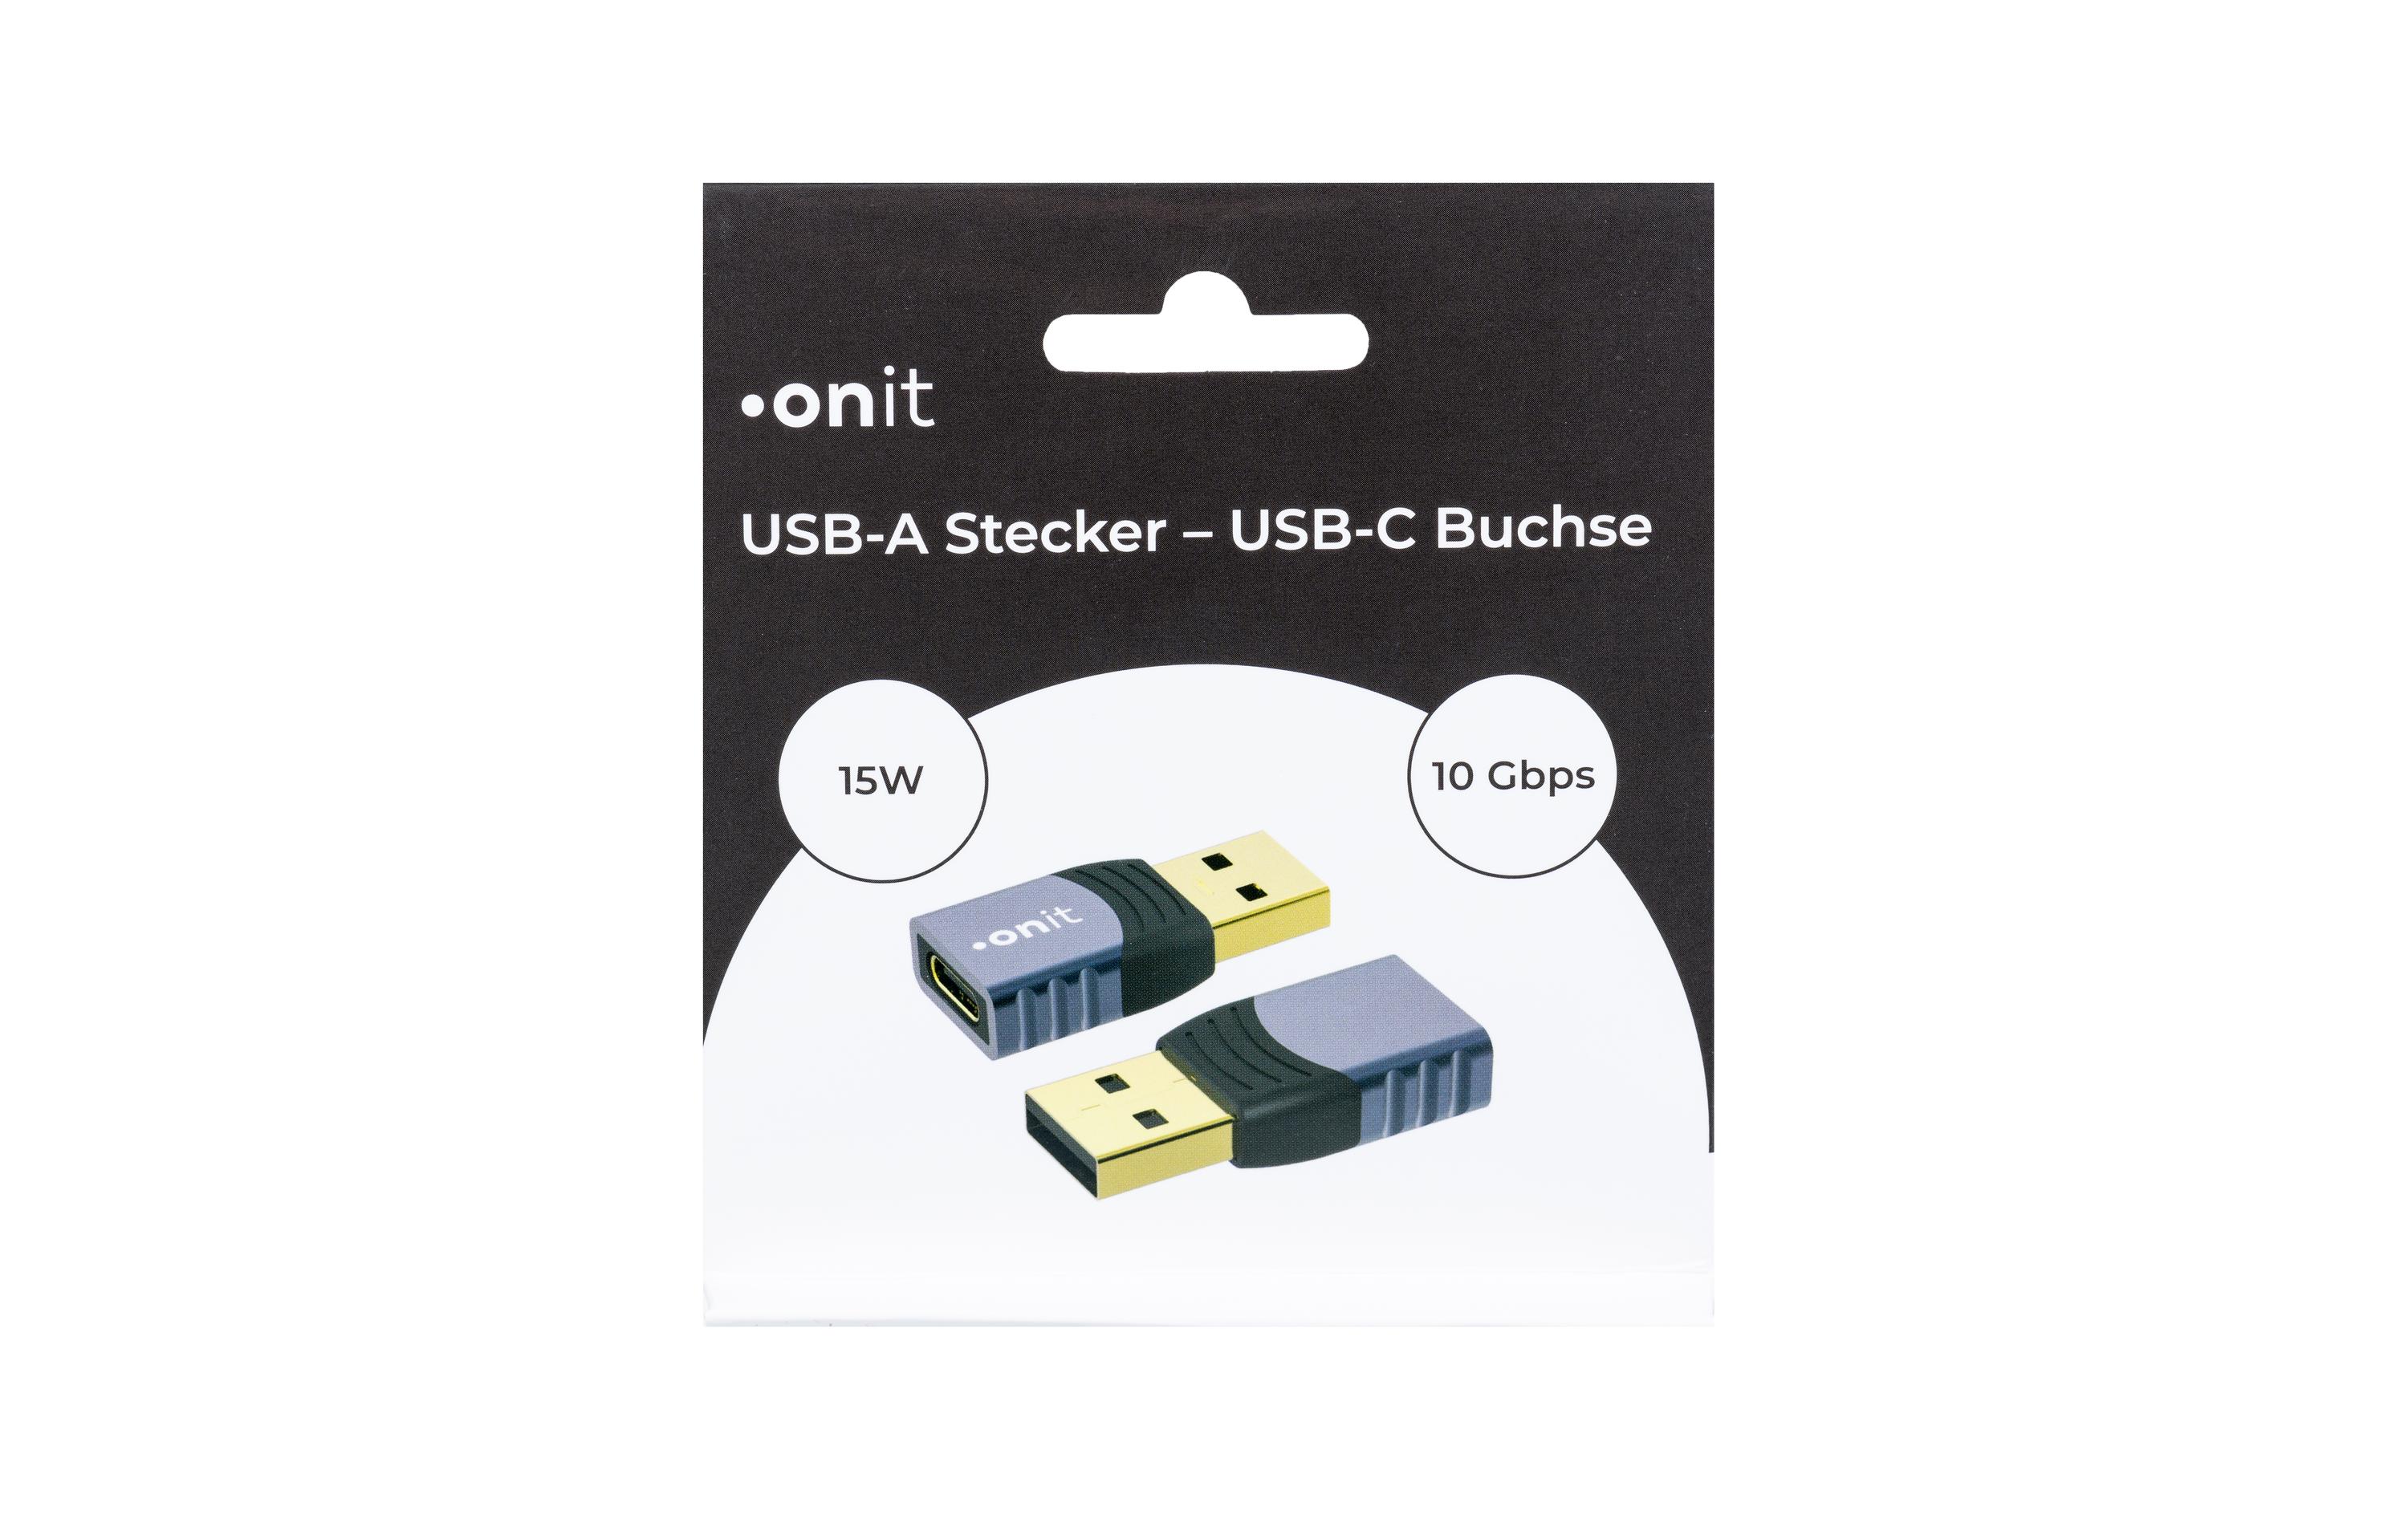 onit USB 3.1 Adapter USB-A Stecker - USB-C Buchse, 1 Stück